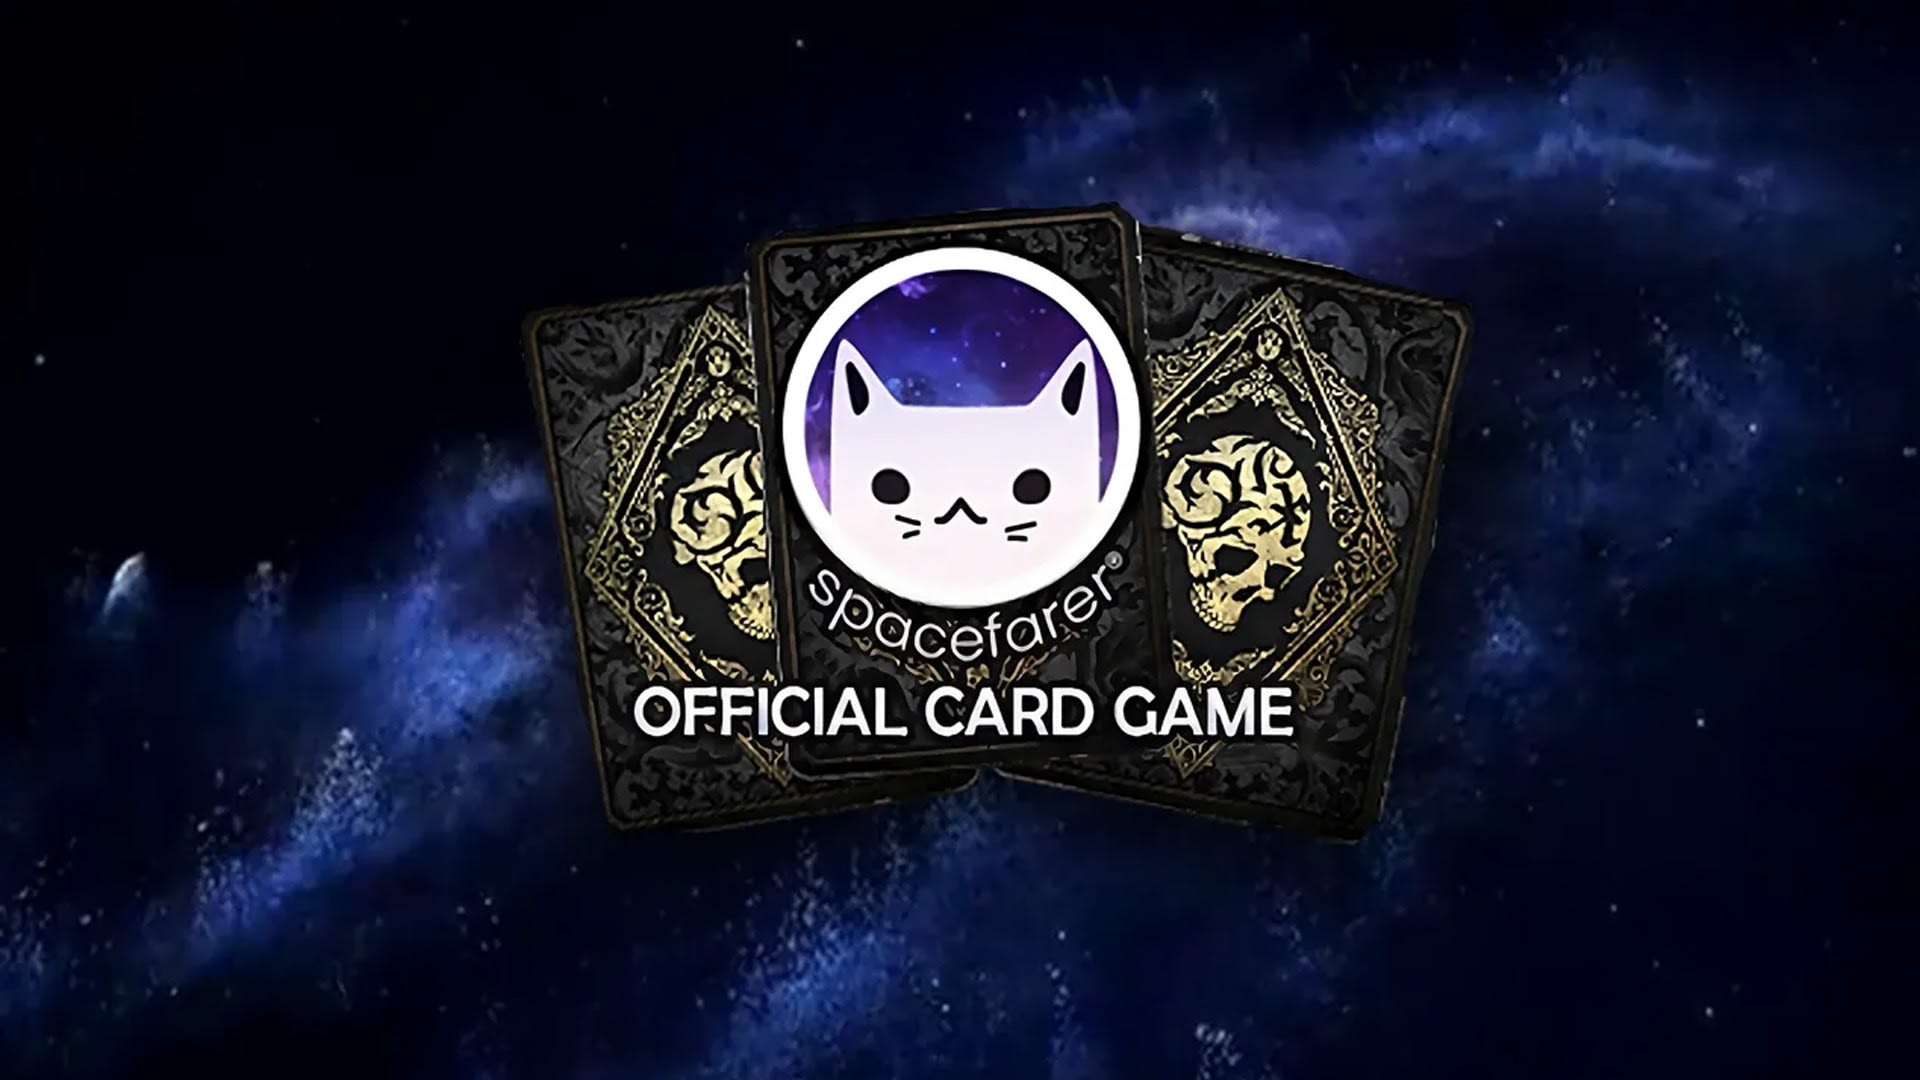 Official Spacefarer Card Game